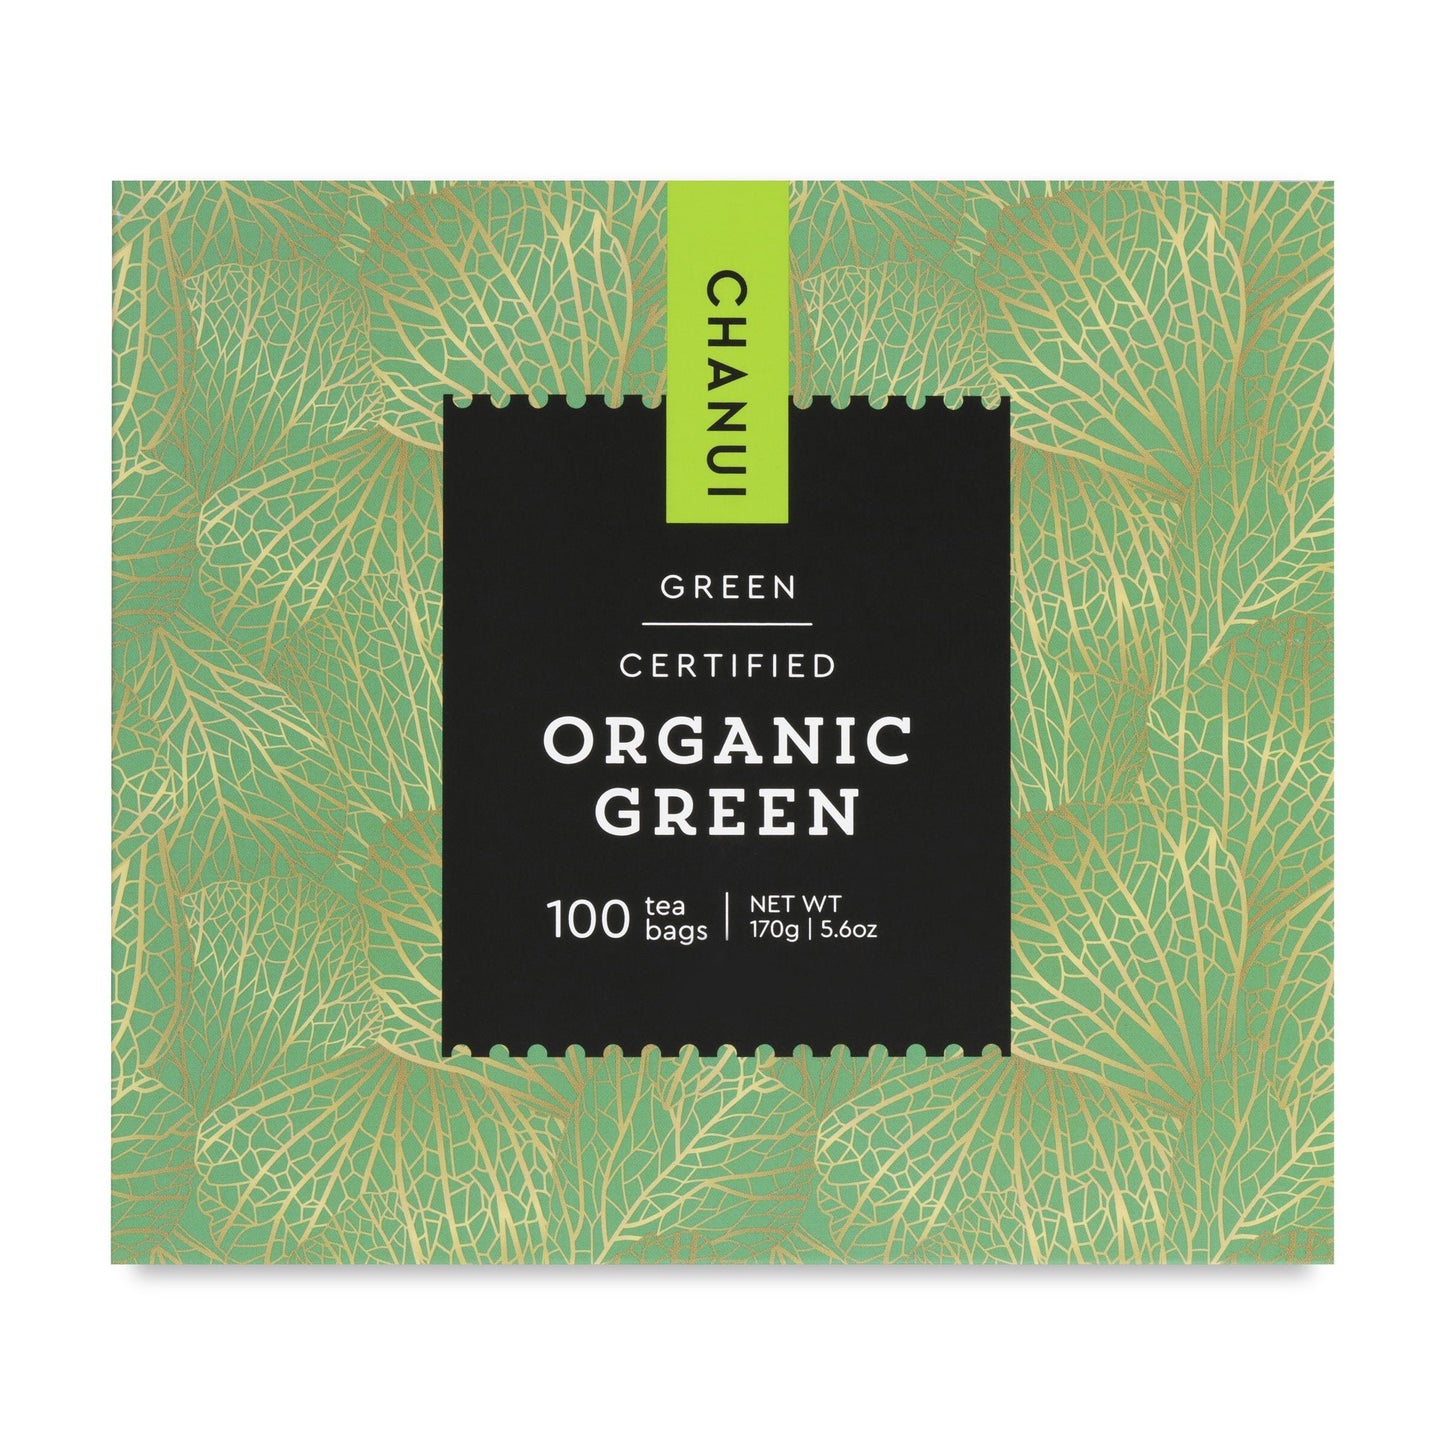 Green and Black box of Chanui Organic Green 100 Teabags